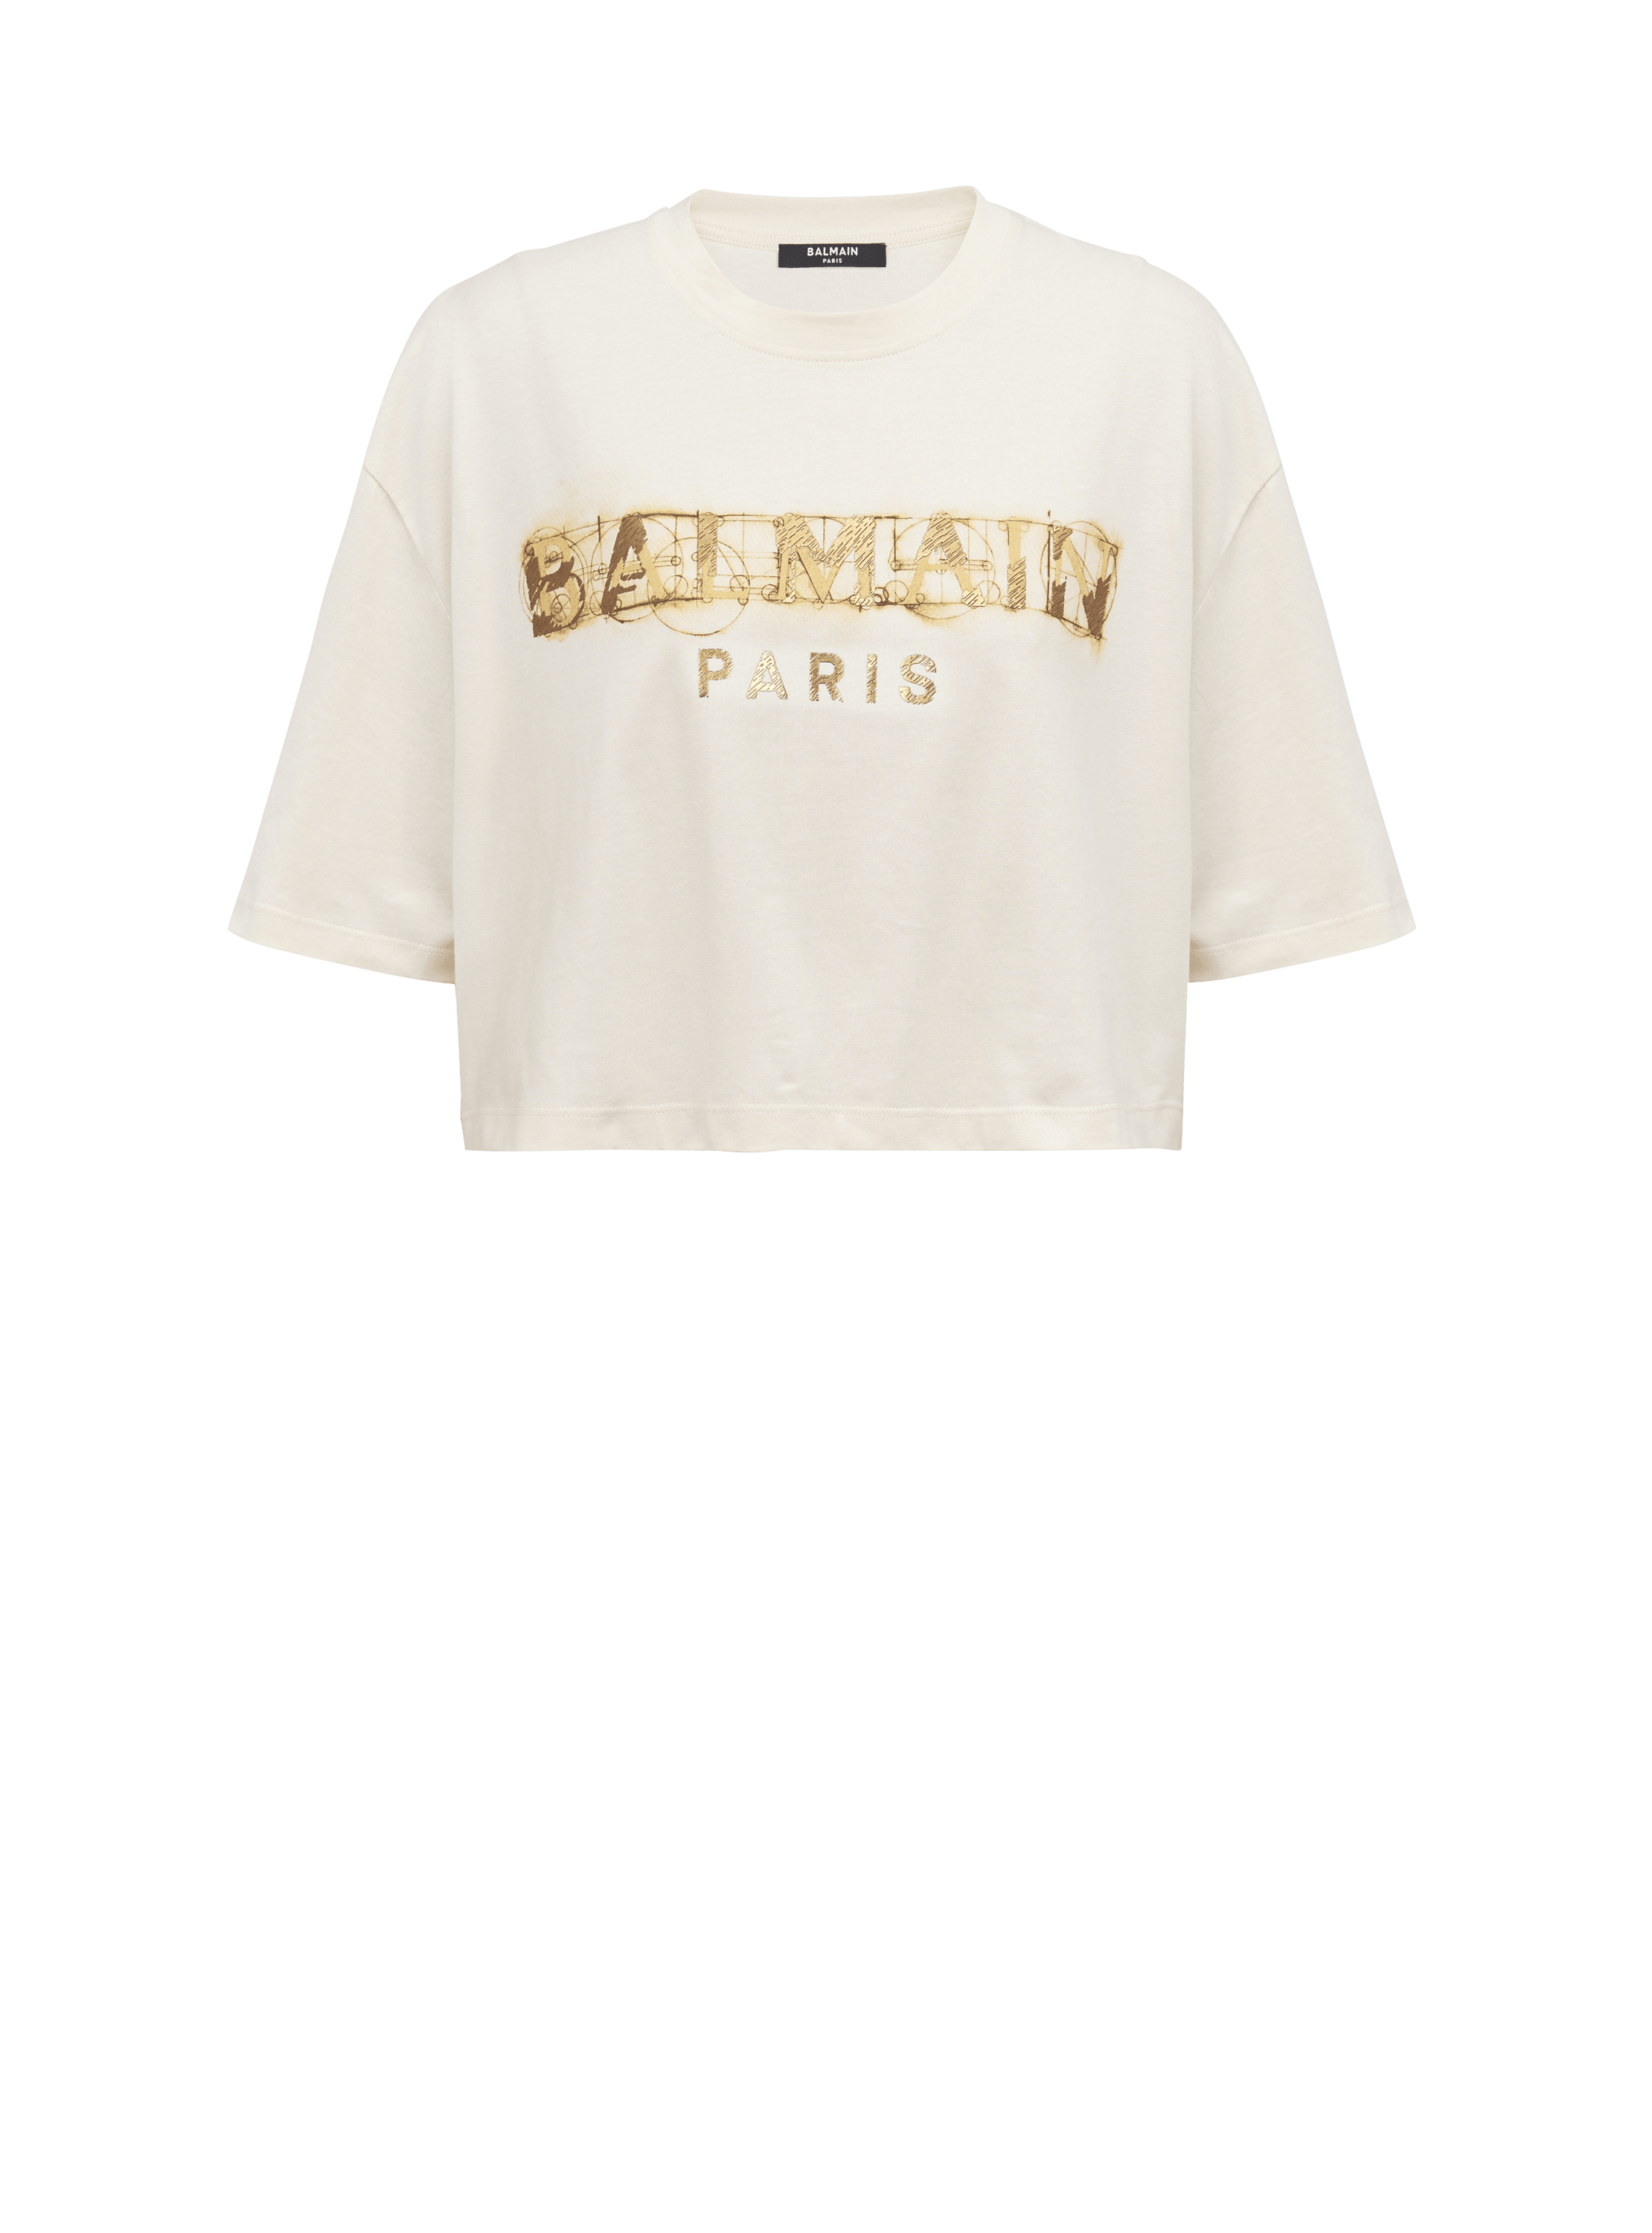 Cropped metallic Balmain print T-shirt, beige, hi-res